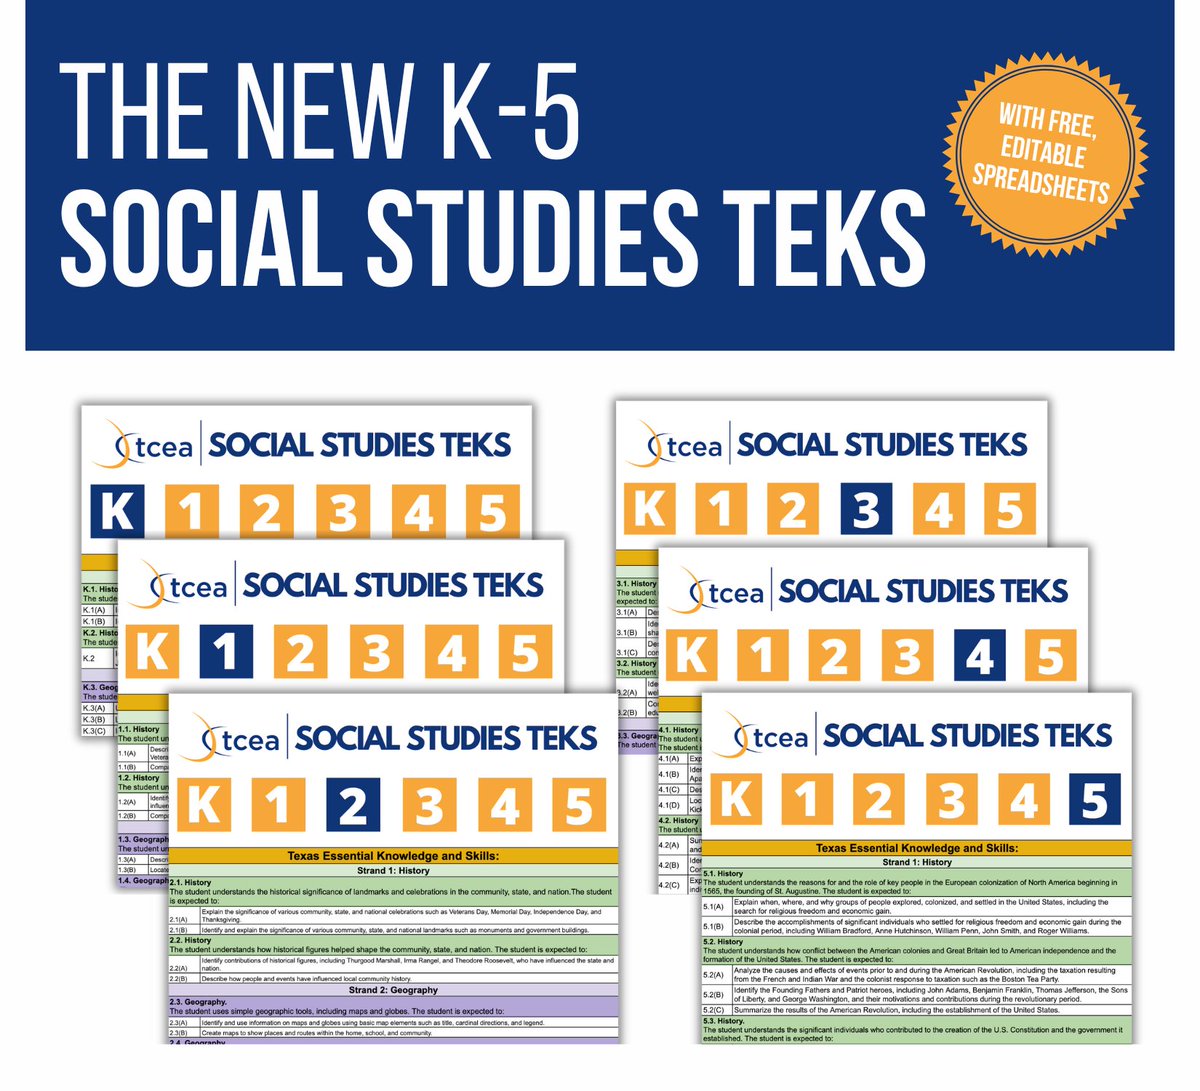 We’re back with more editable #TEKS and “I can” statement spreadsheets for the new K-5 #SocialStudies TEKS!

sbee.link/pyantqvu7w  @EmilyforEdu 
#txed #sschat #edutwitter